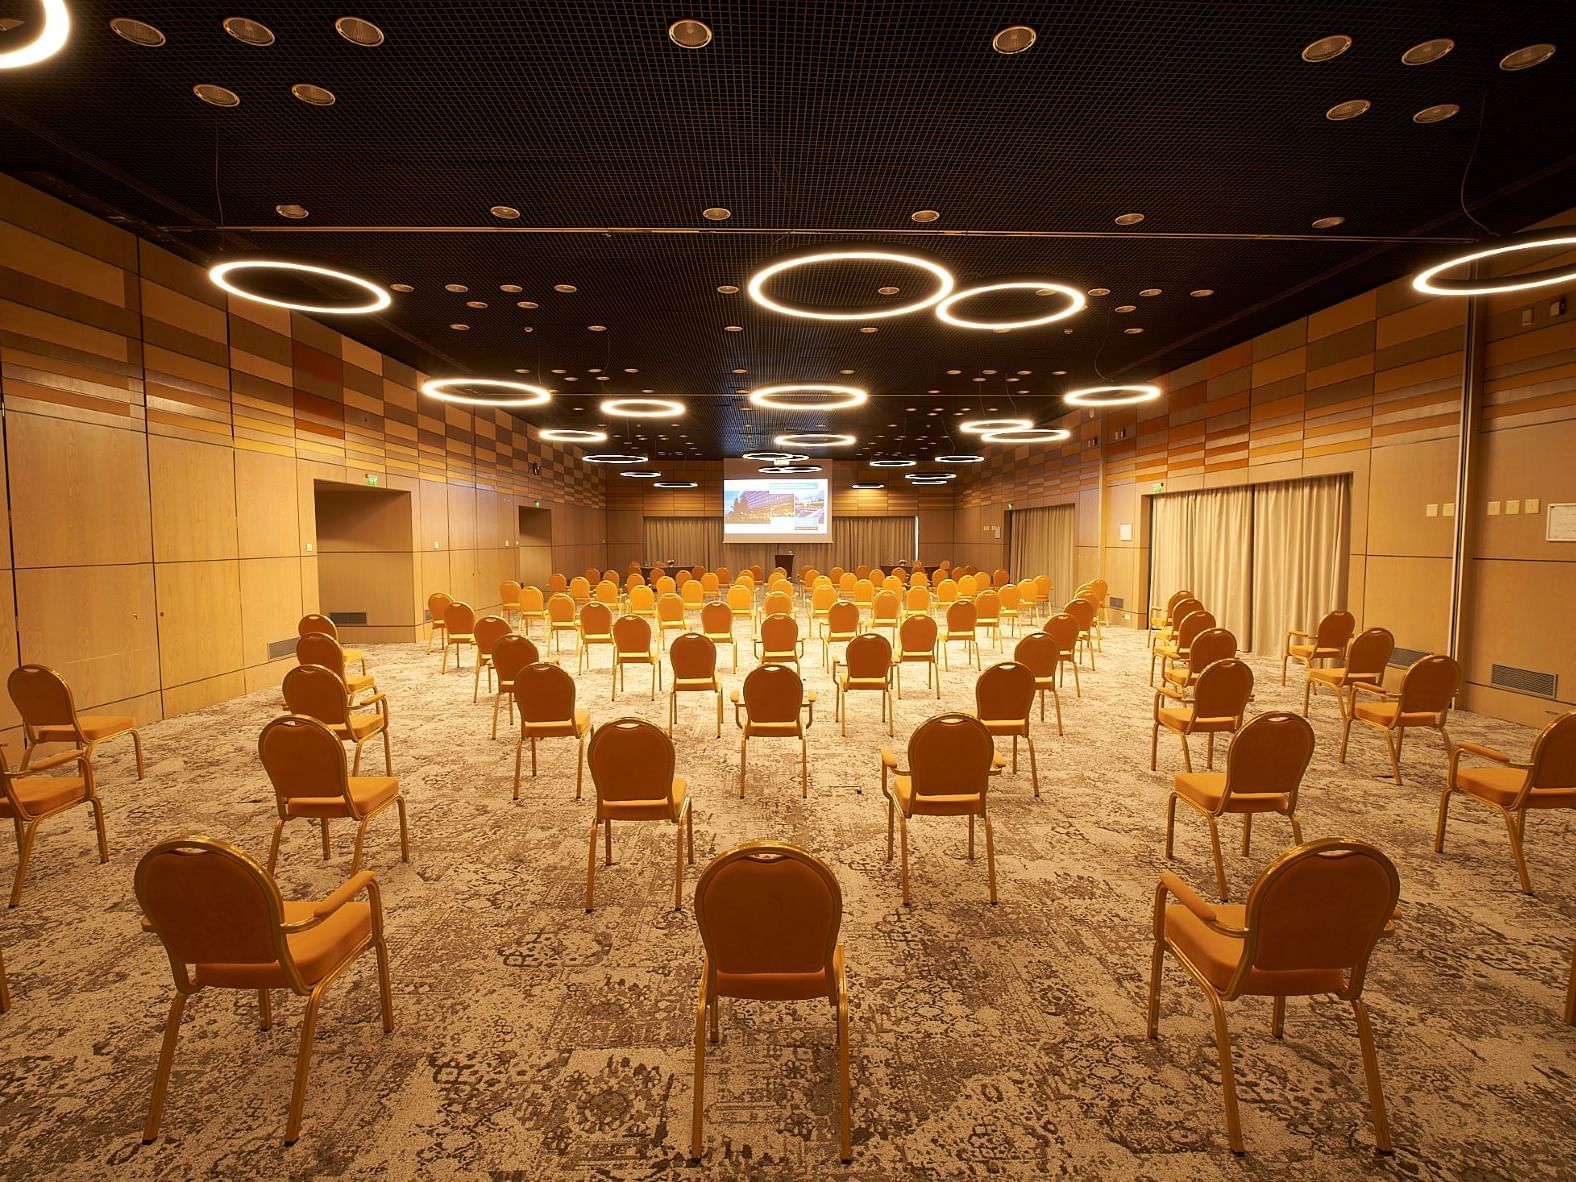 Interior of Europa Ballroom 3 Modules at Ana Hotels Europa